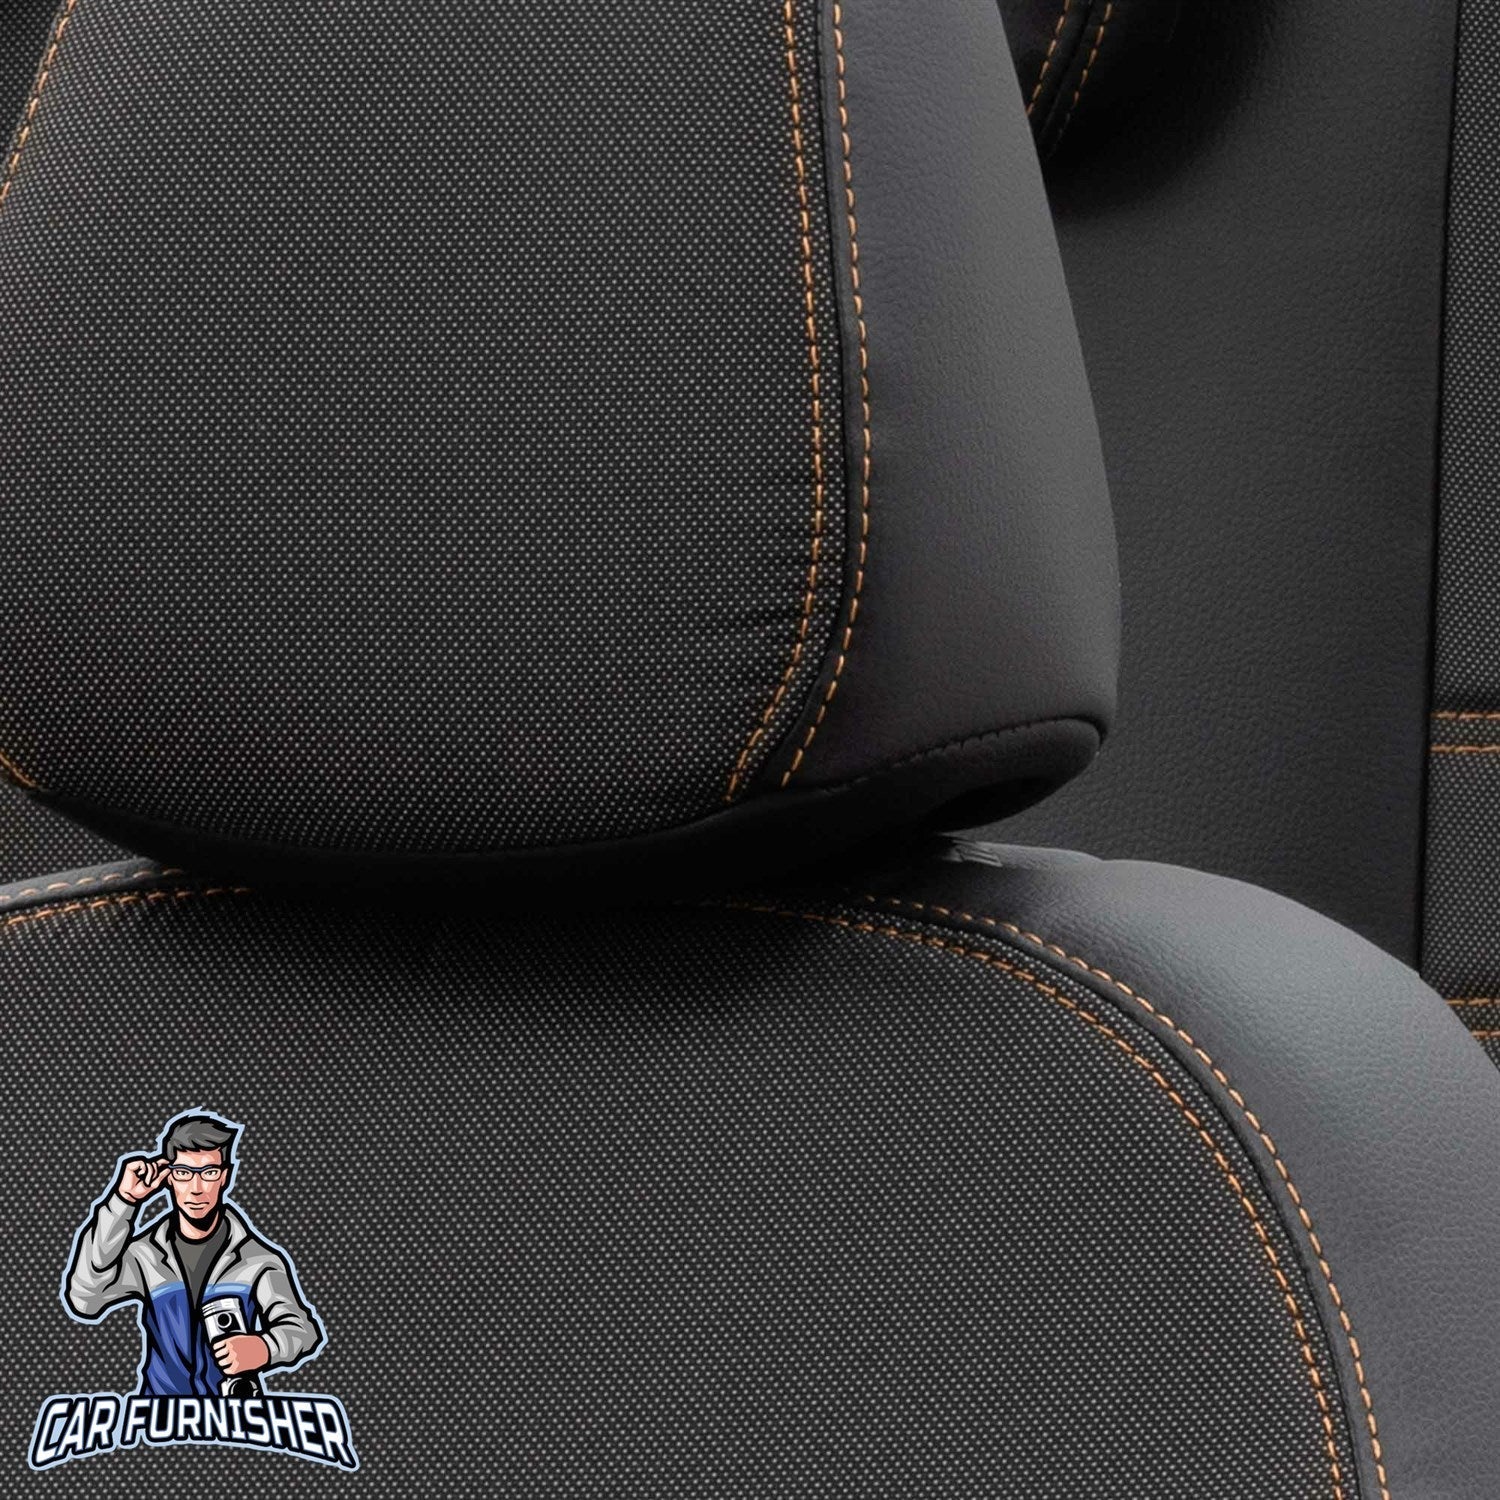 Chery Tiggo Seat Covers Paris Leather & Jacquard Design Dark Beige Leather & Jacquard Fabric